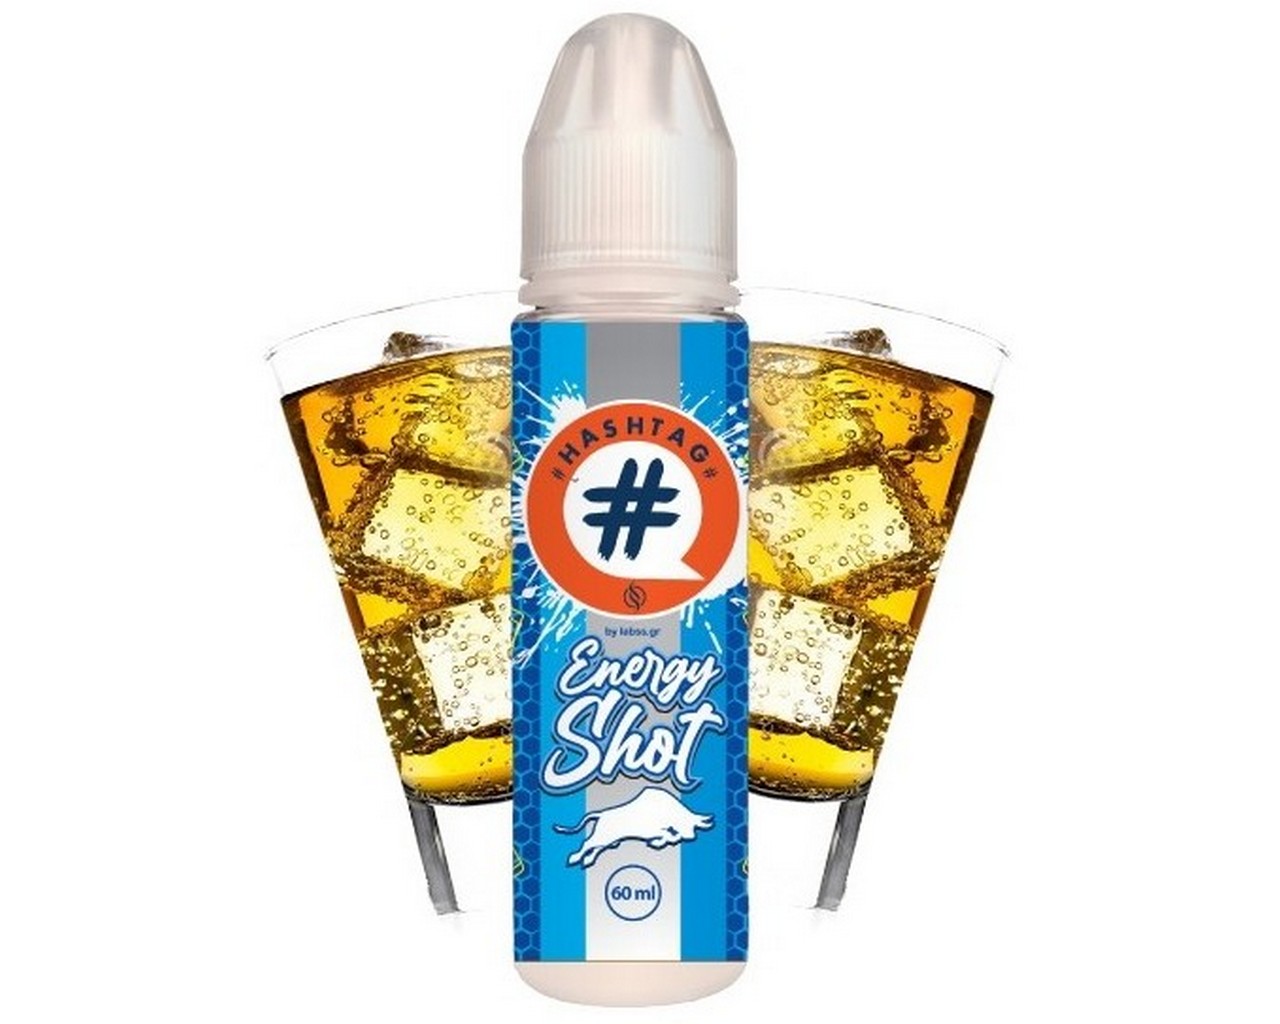 Hashtag Flavorshot Energy Shot 20/60ml